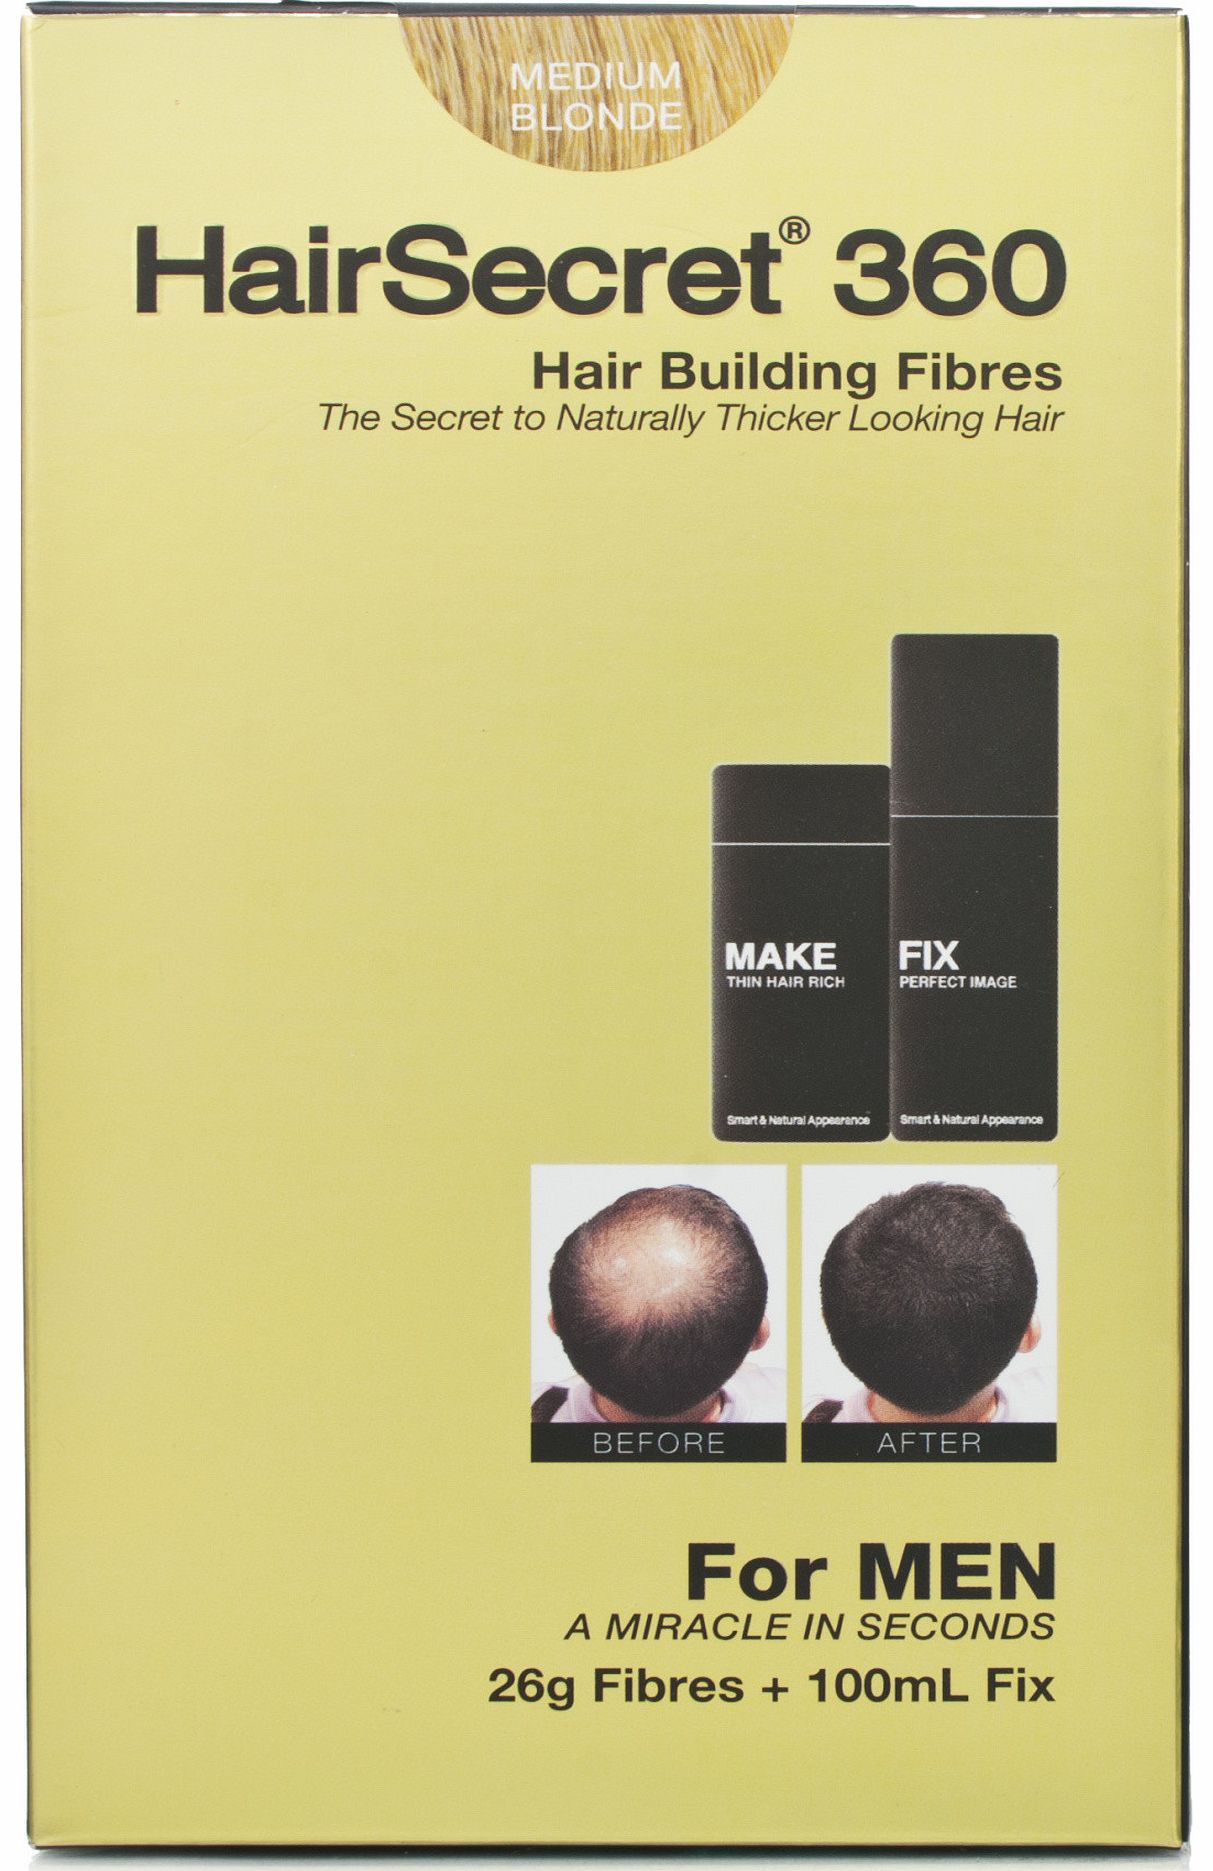 HairSecret 360 For Men Medium Blonde